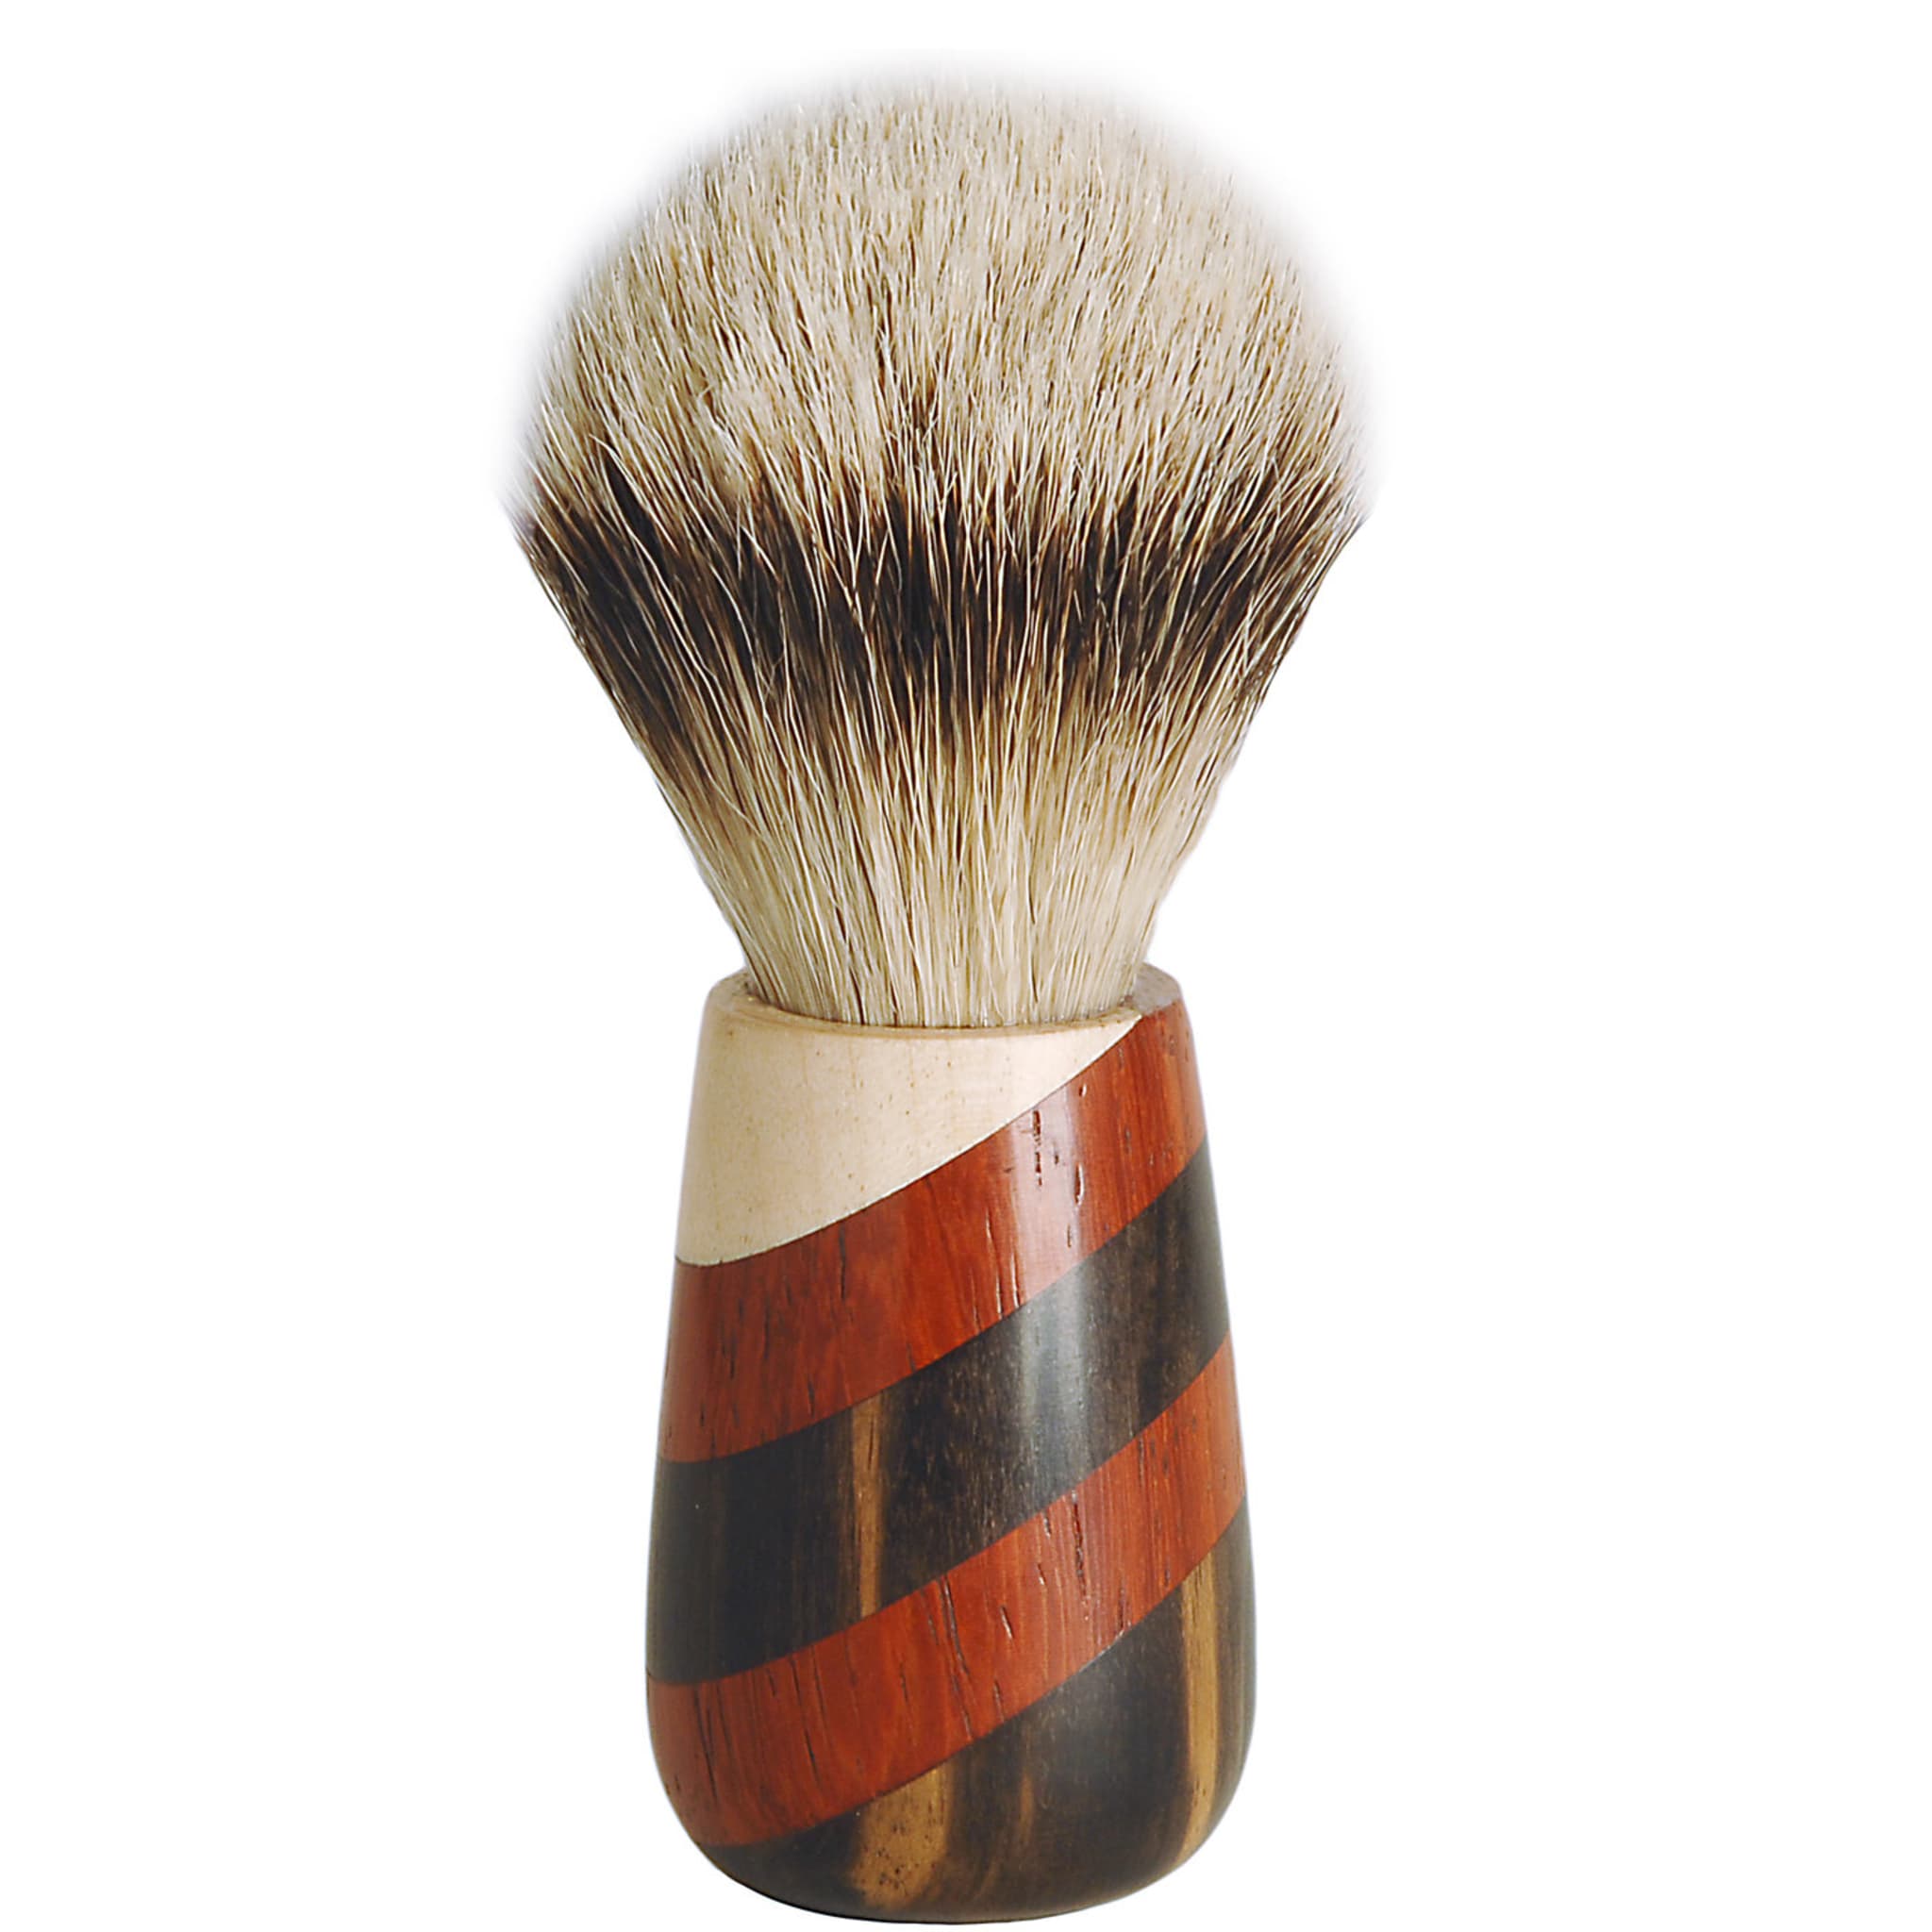 Striped Shaving Brush in Ebony, Padauk and Maple Wood - Alternative view 1